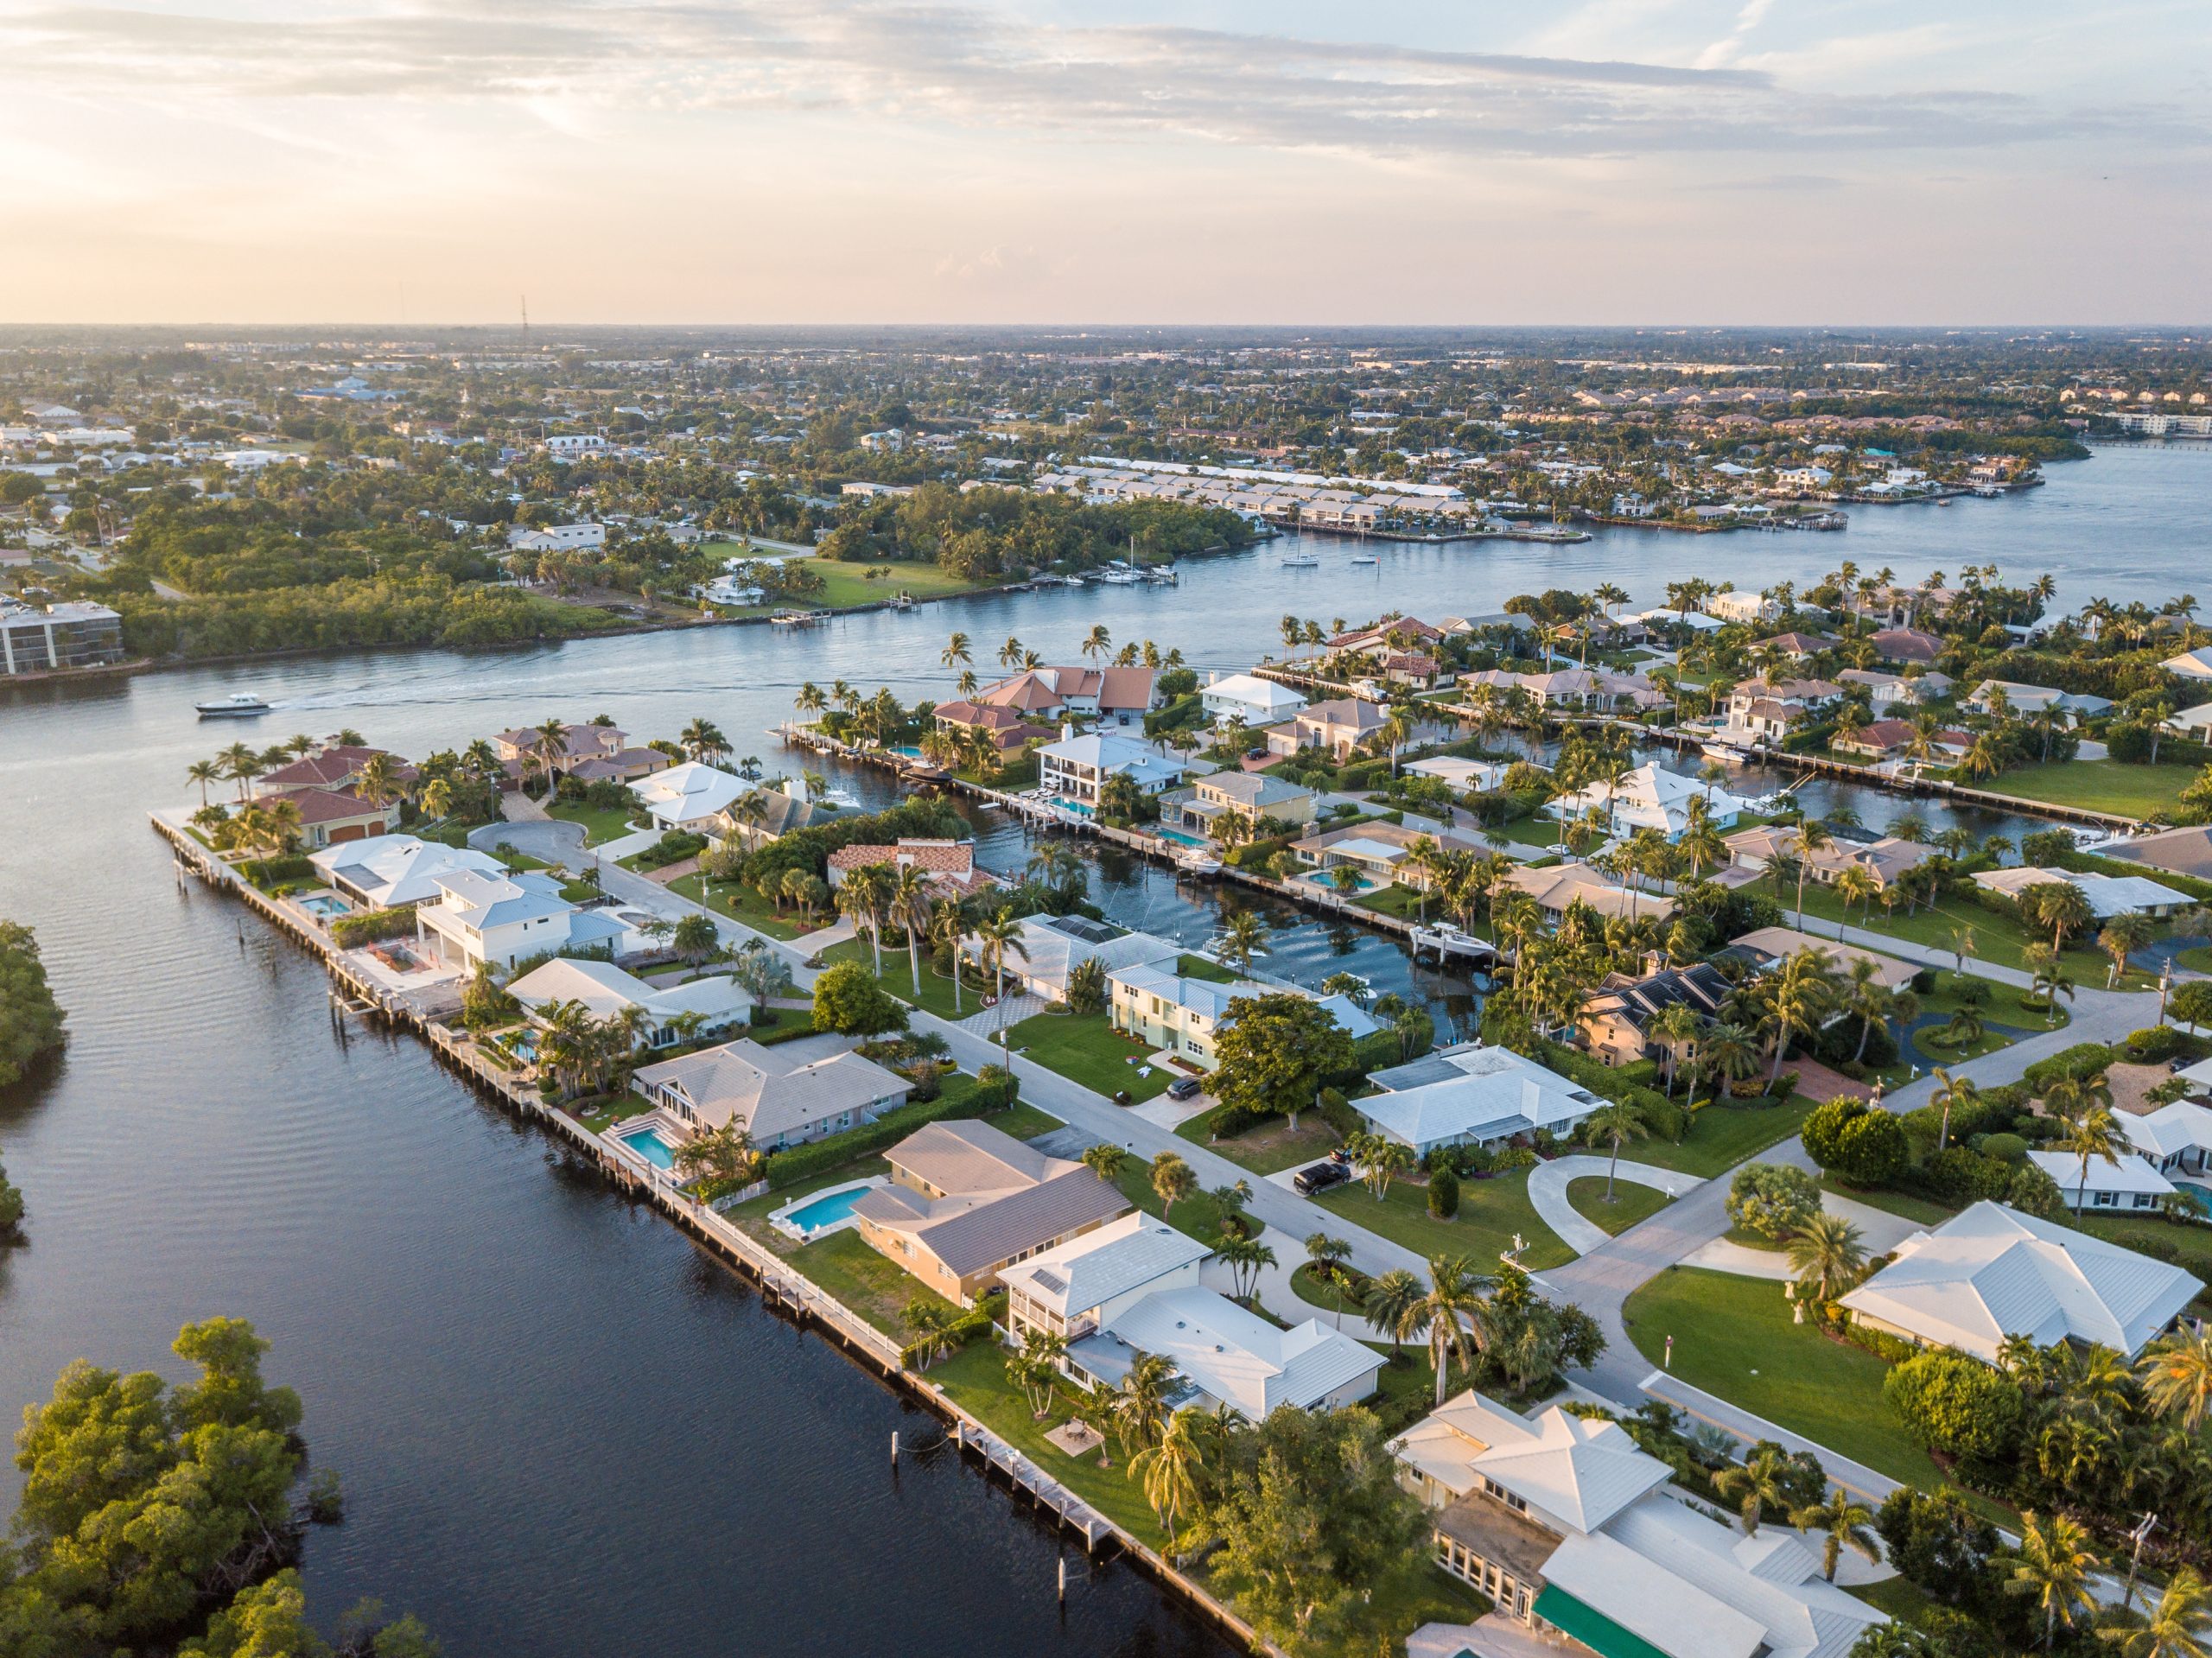 Covid-19 pandemic facilitates housing gains for Florida